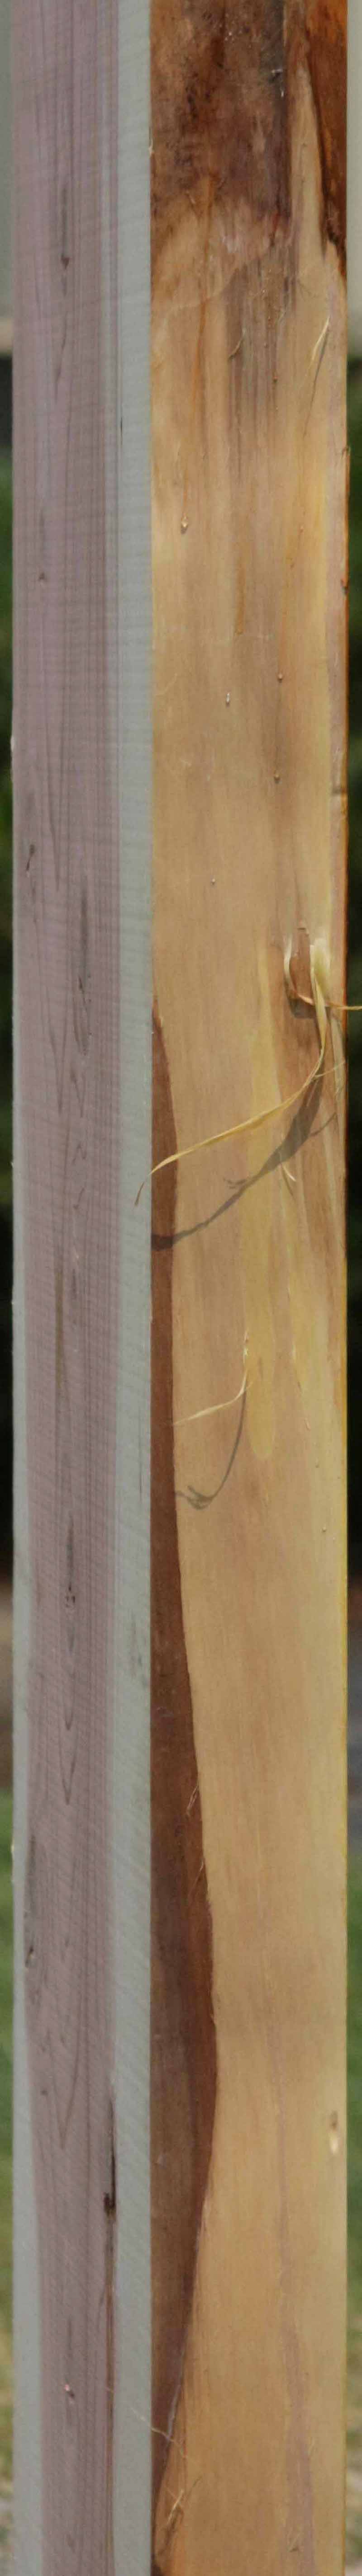 Knotty Sequoia Mantel